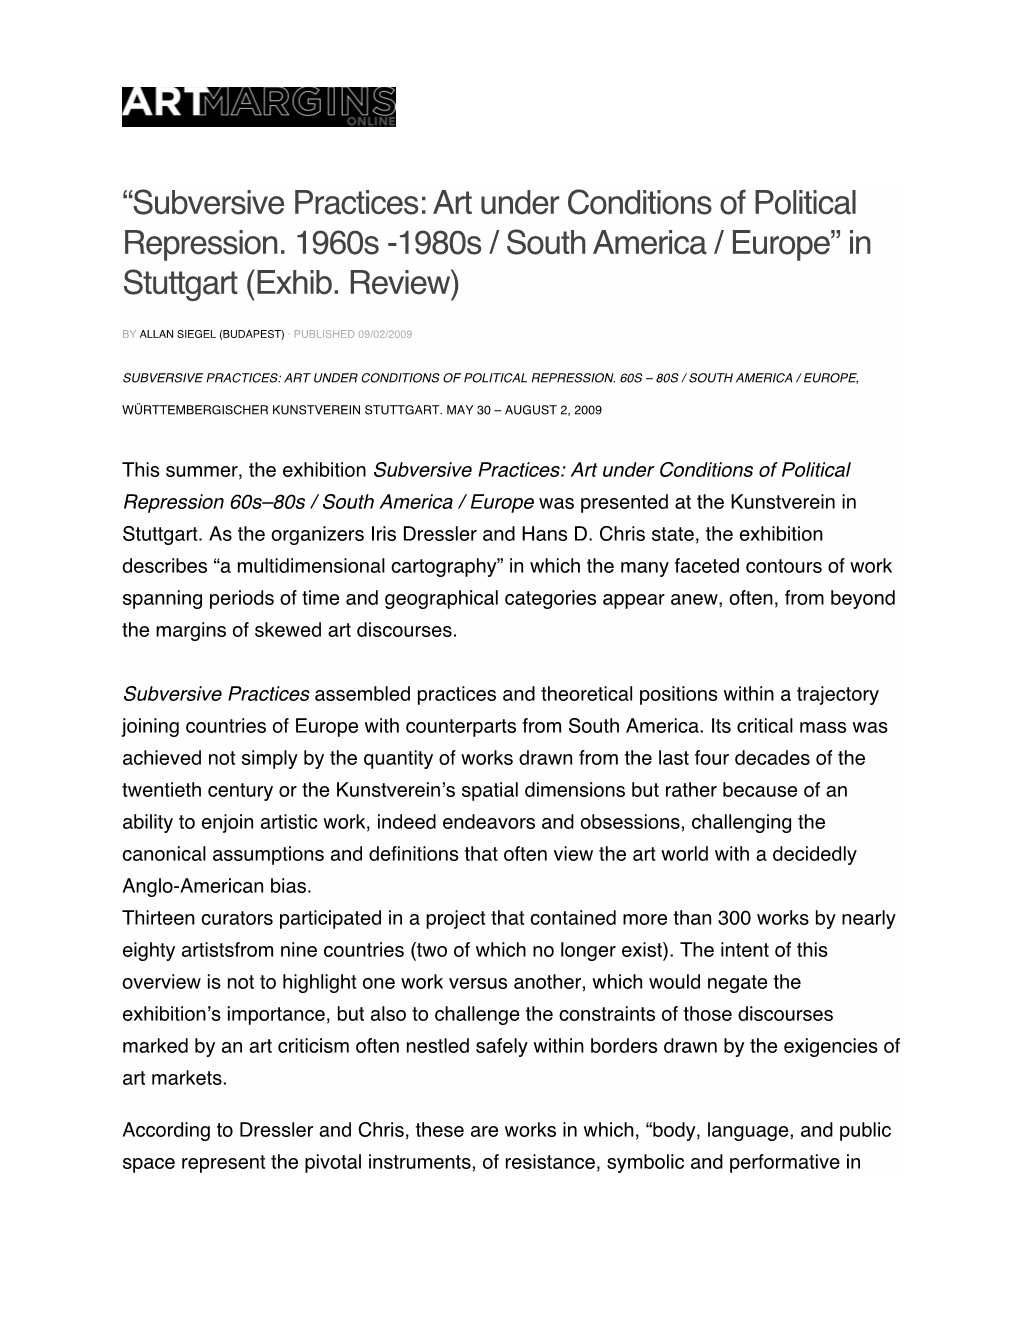 “Subversive Practices: Art Under Conditions of Political Repression